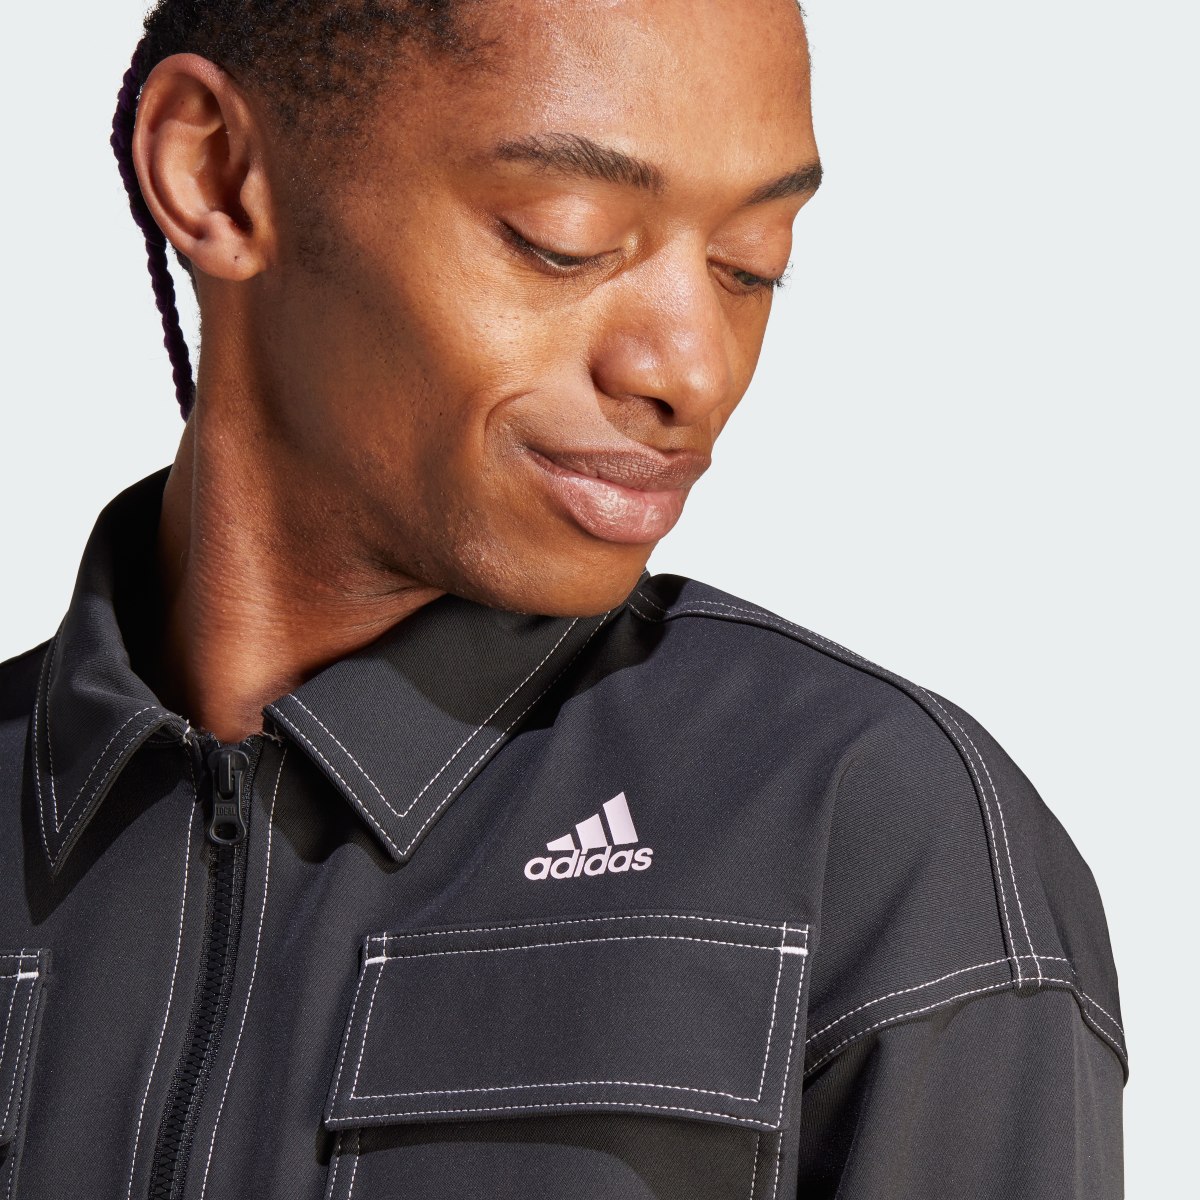 Adidas Dance 3-Stripes Crop Jacket. 5